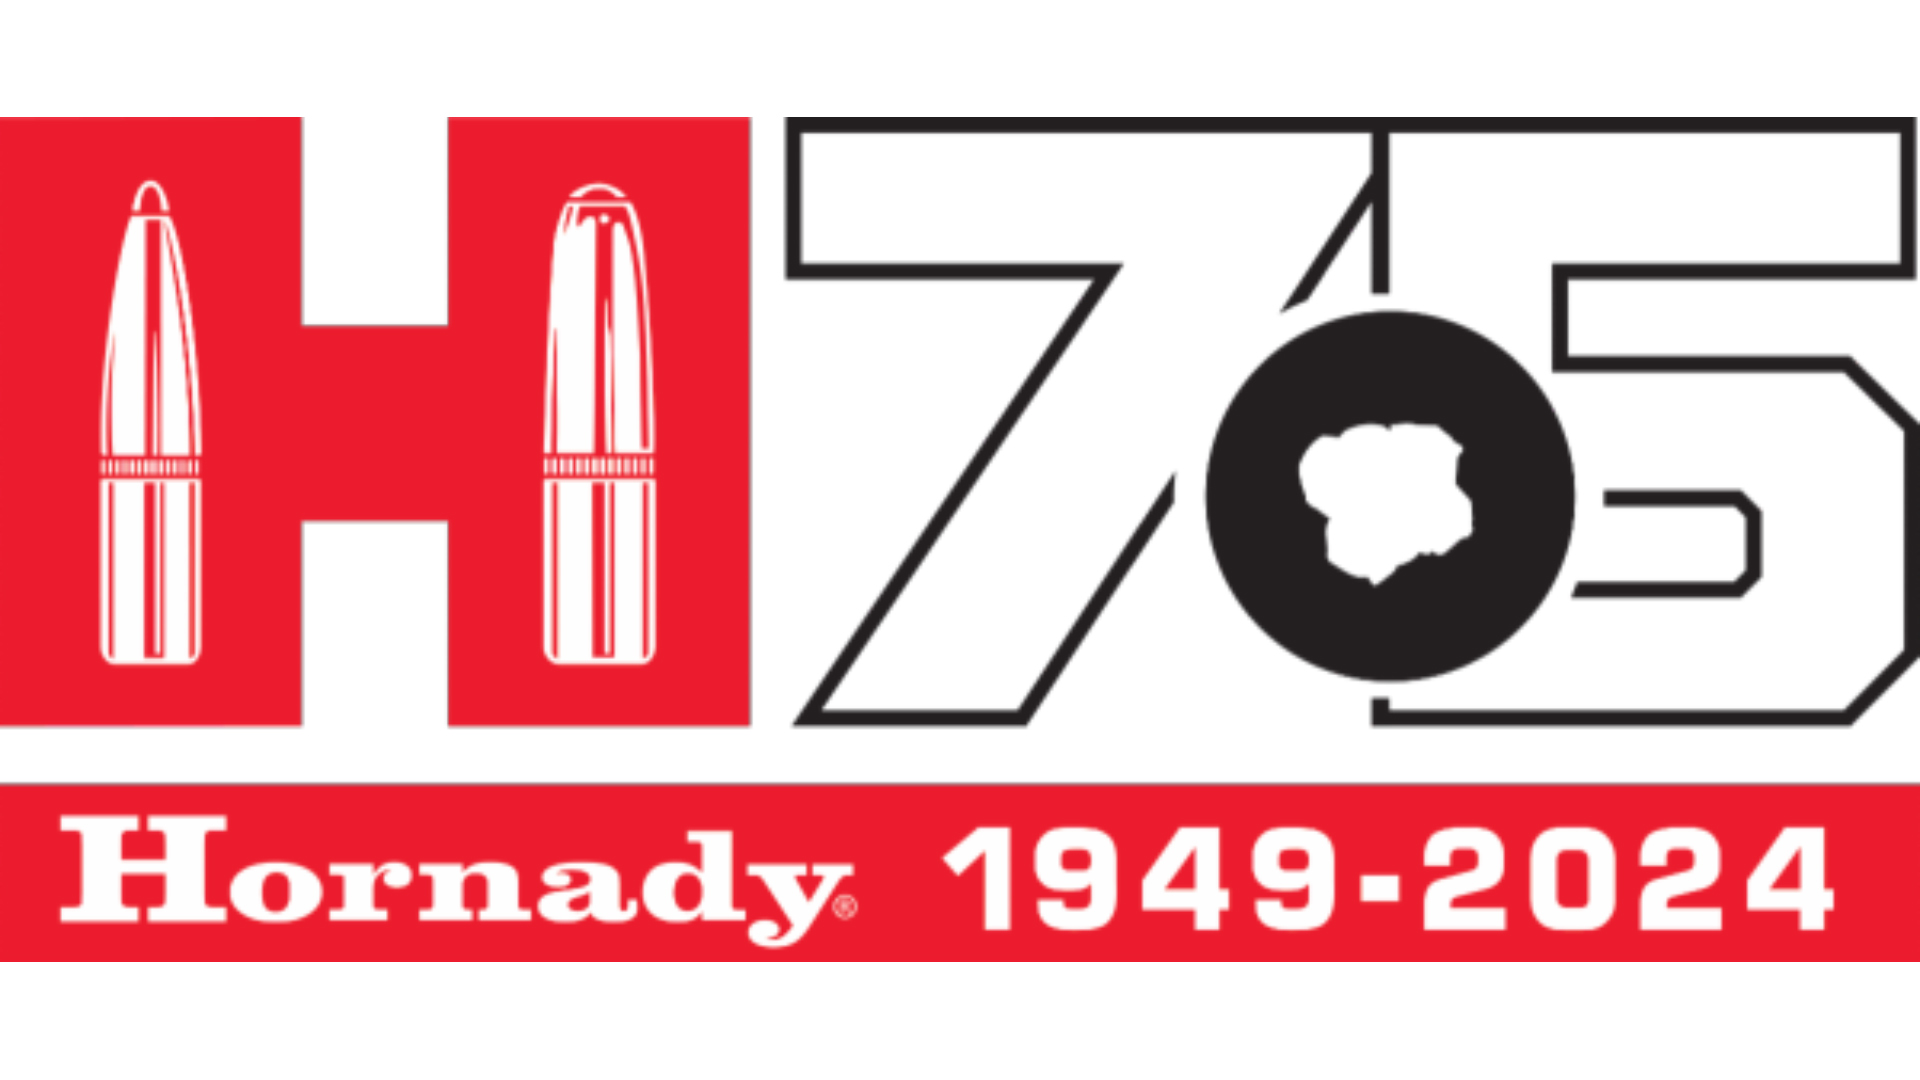 Hornady 75th anniversary logo